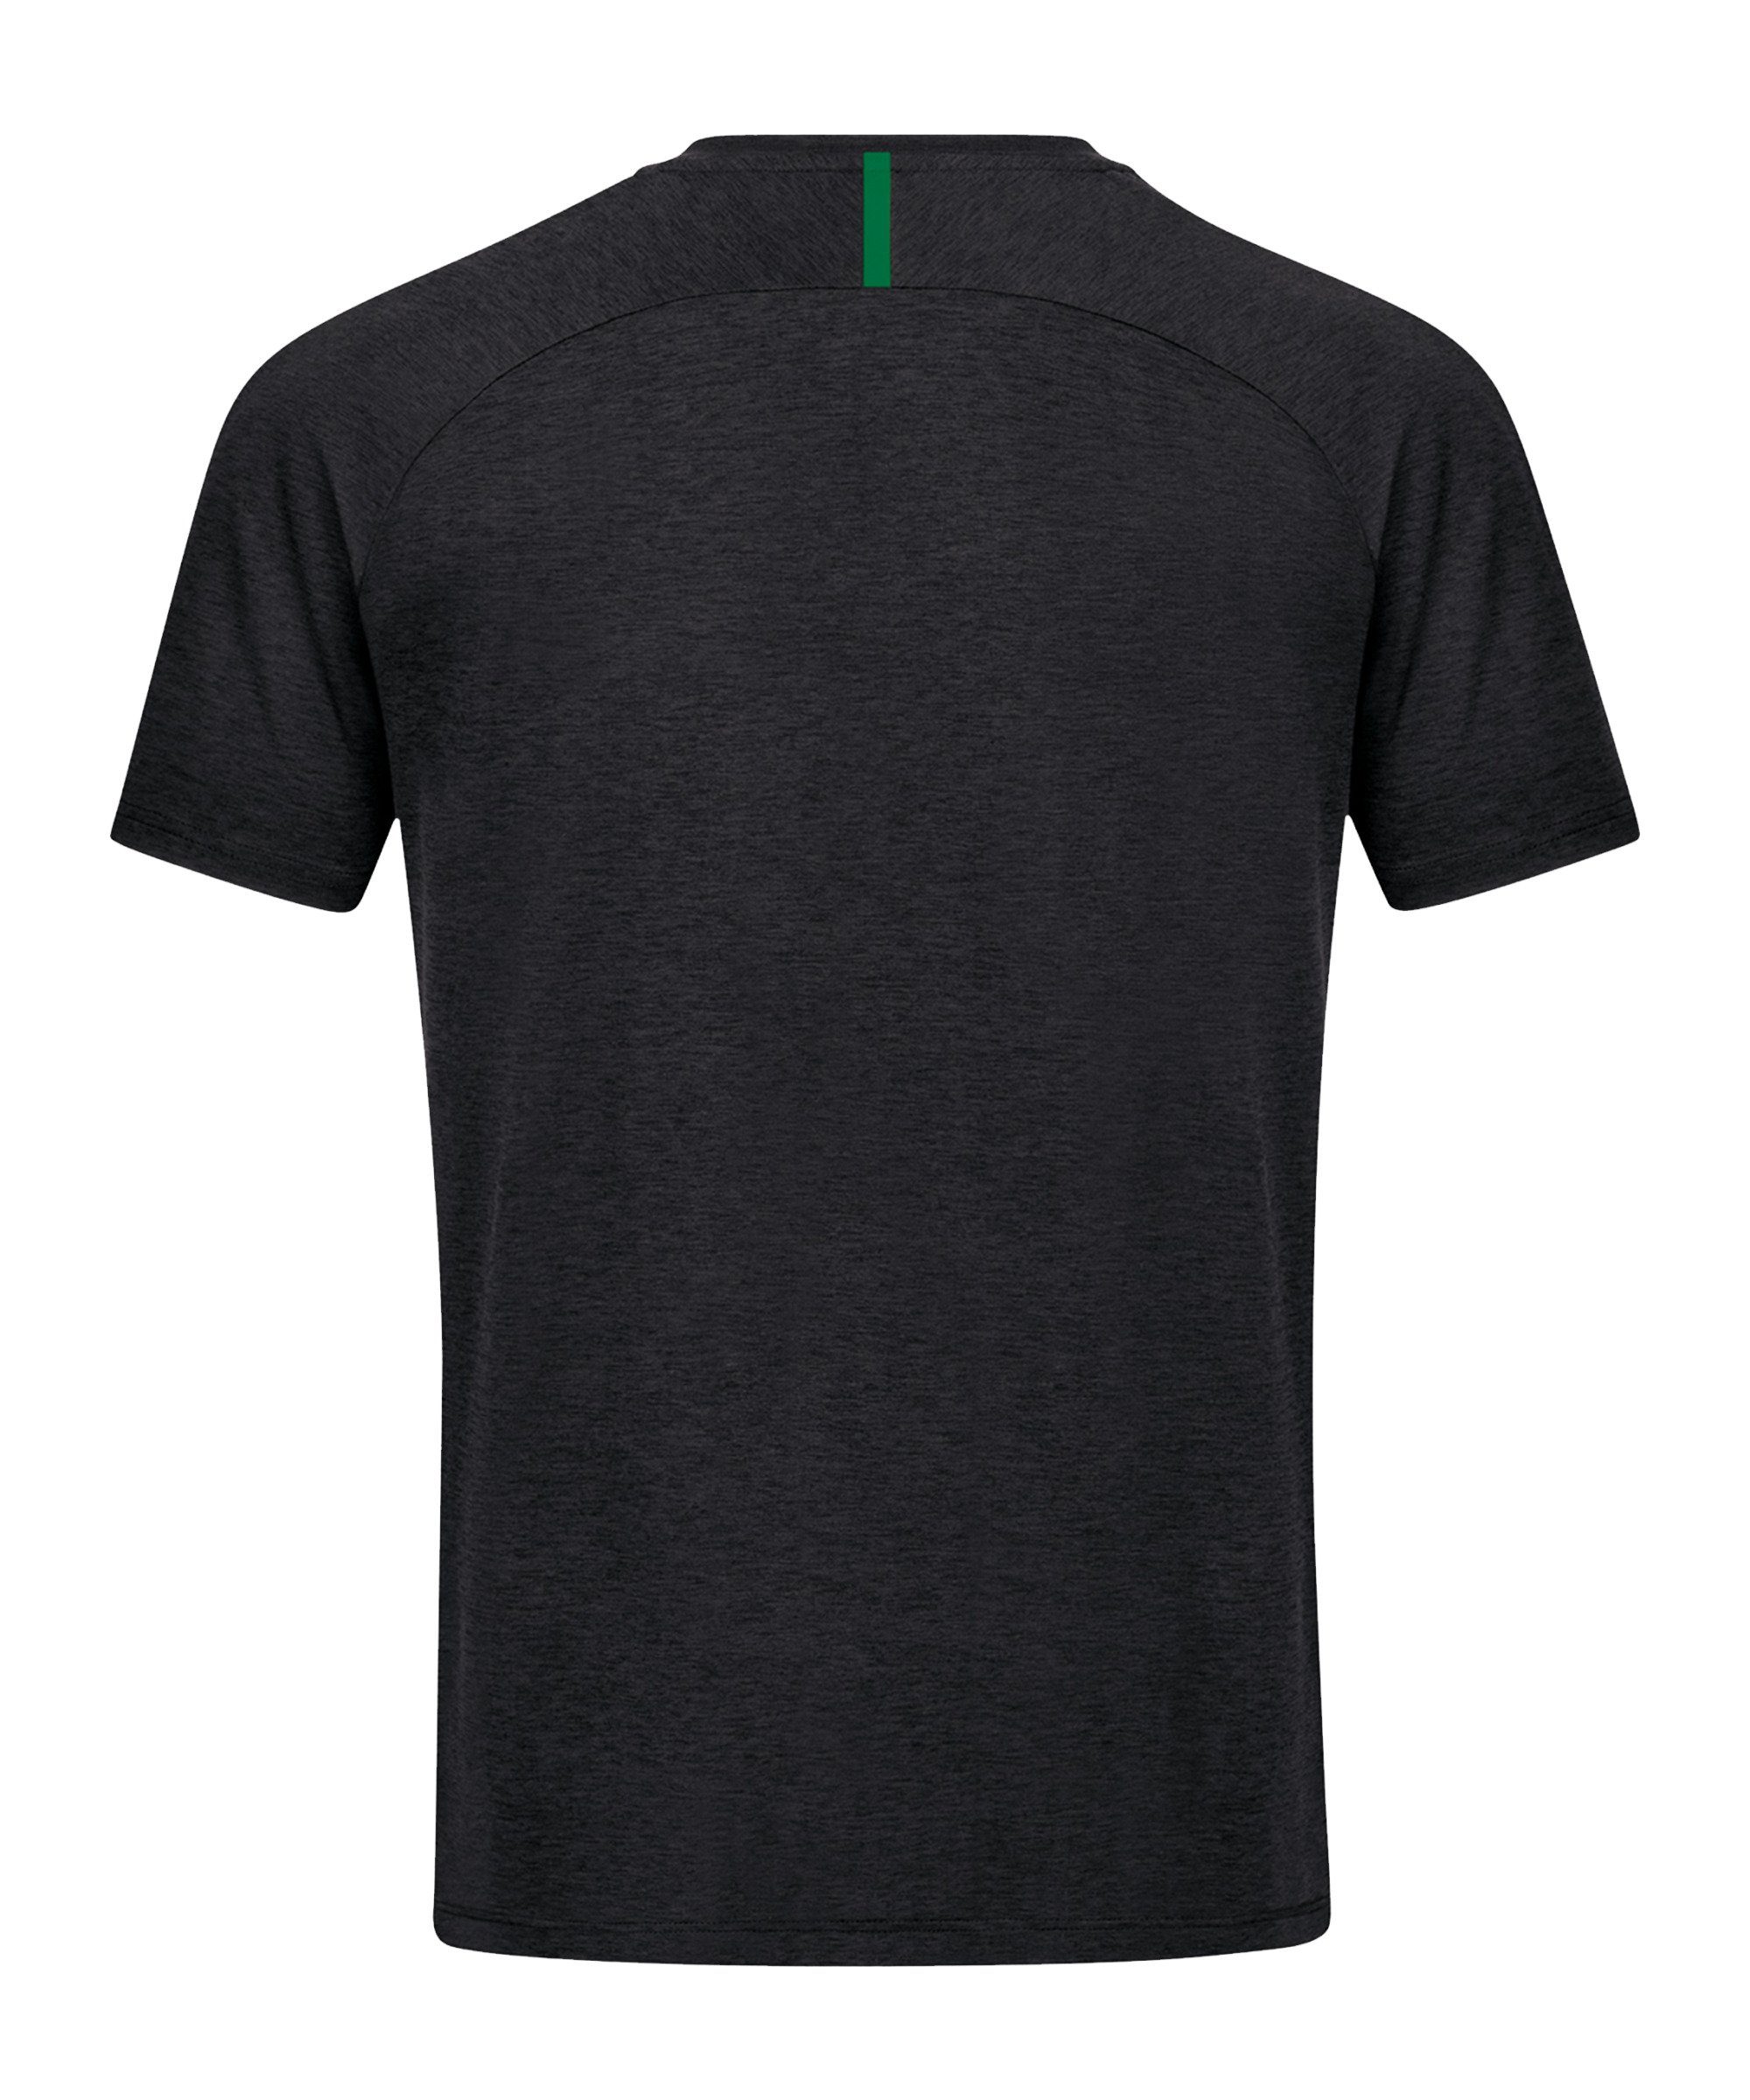 default Freizeit Challenge T-Shirt T-Shirt schwarzgruen Jako